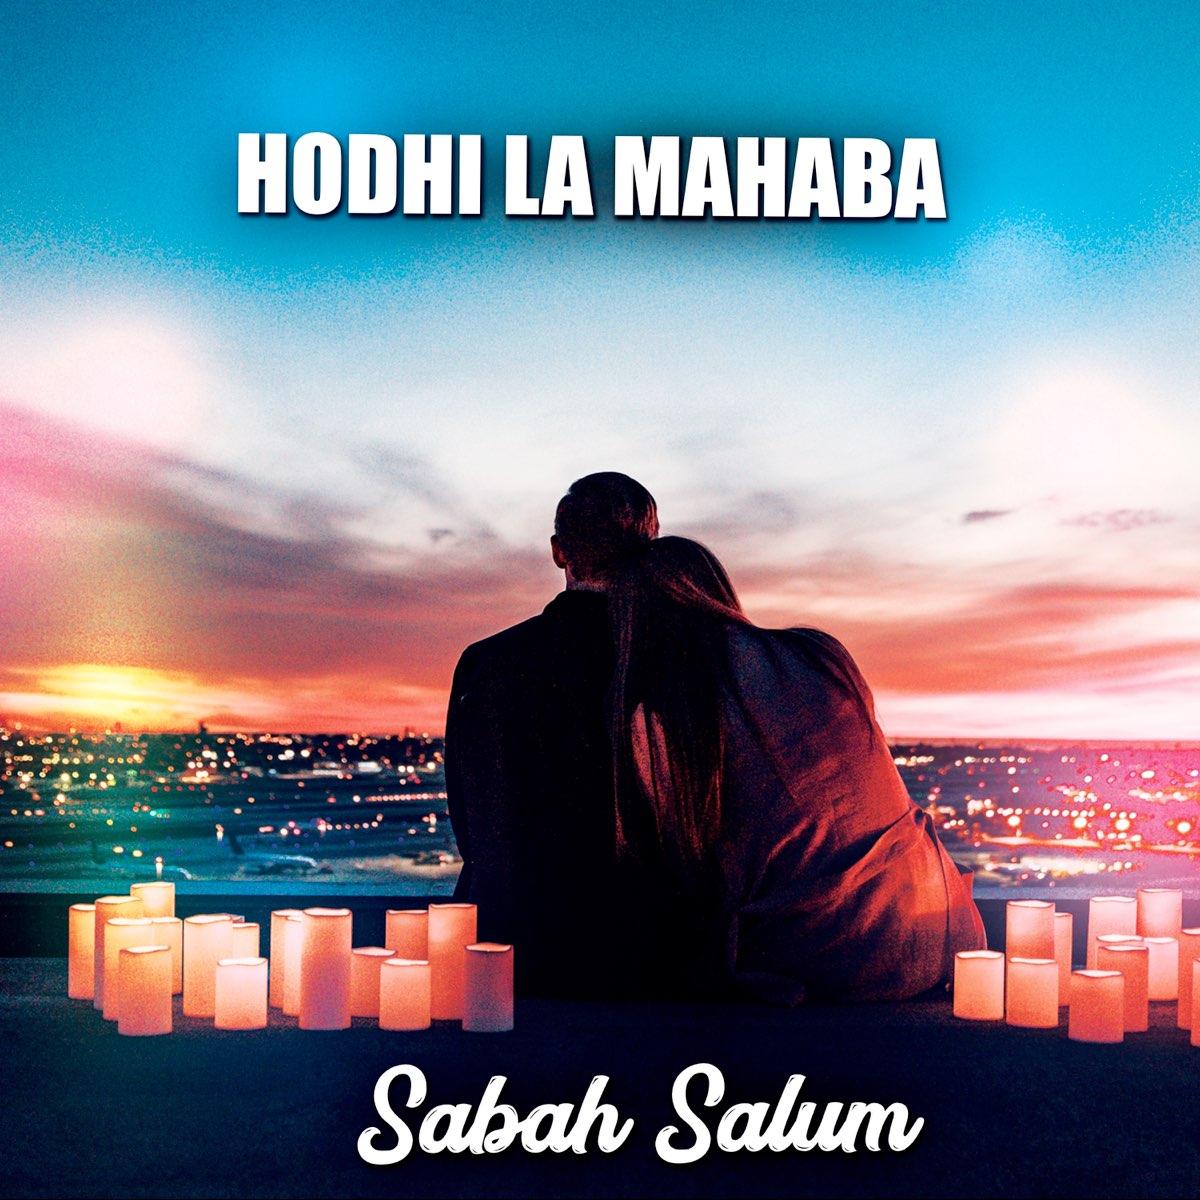 Hodhi La Mahaba By Sabah Salum